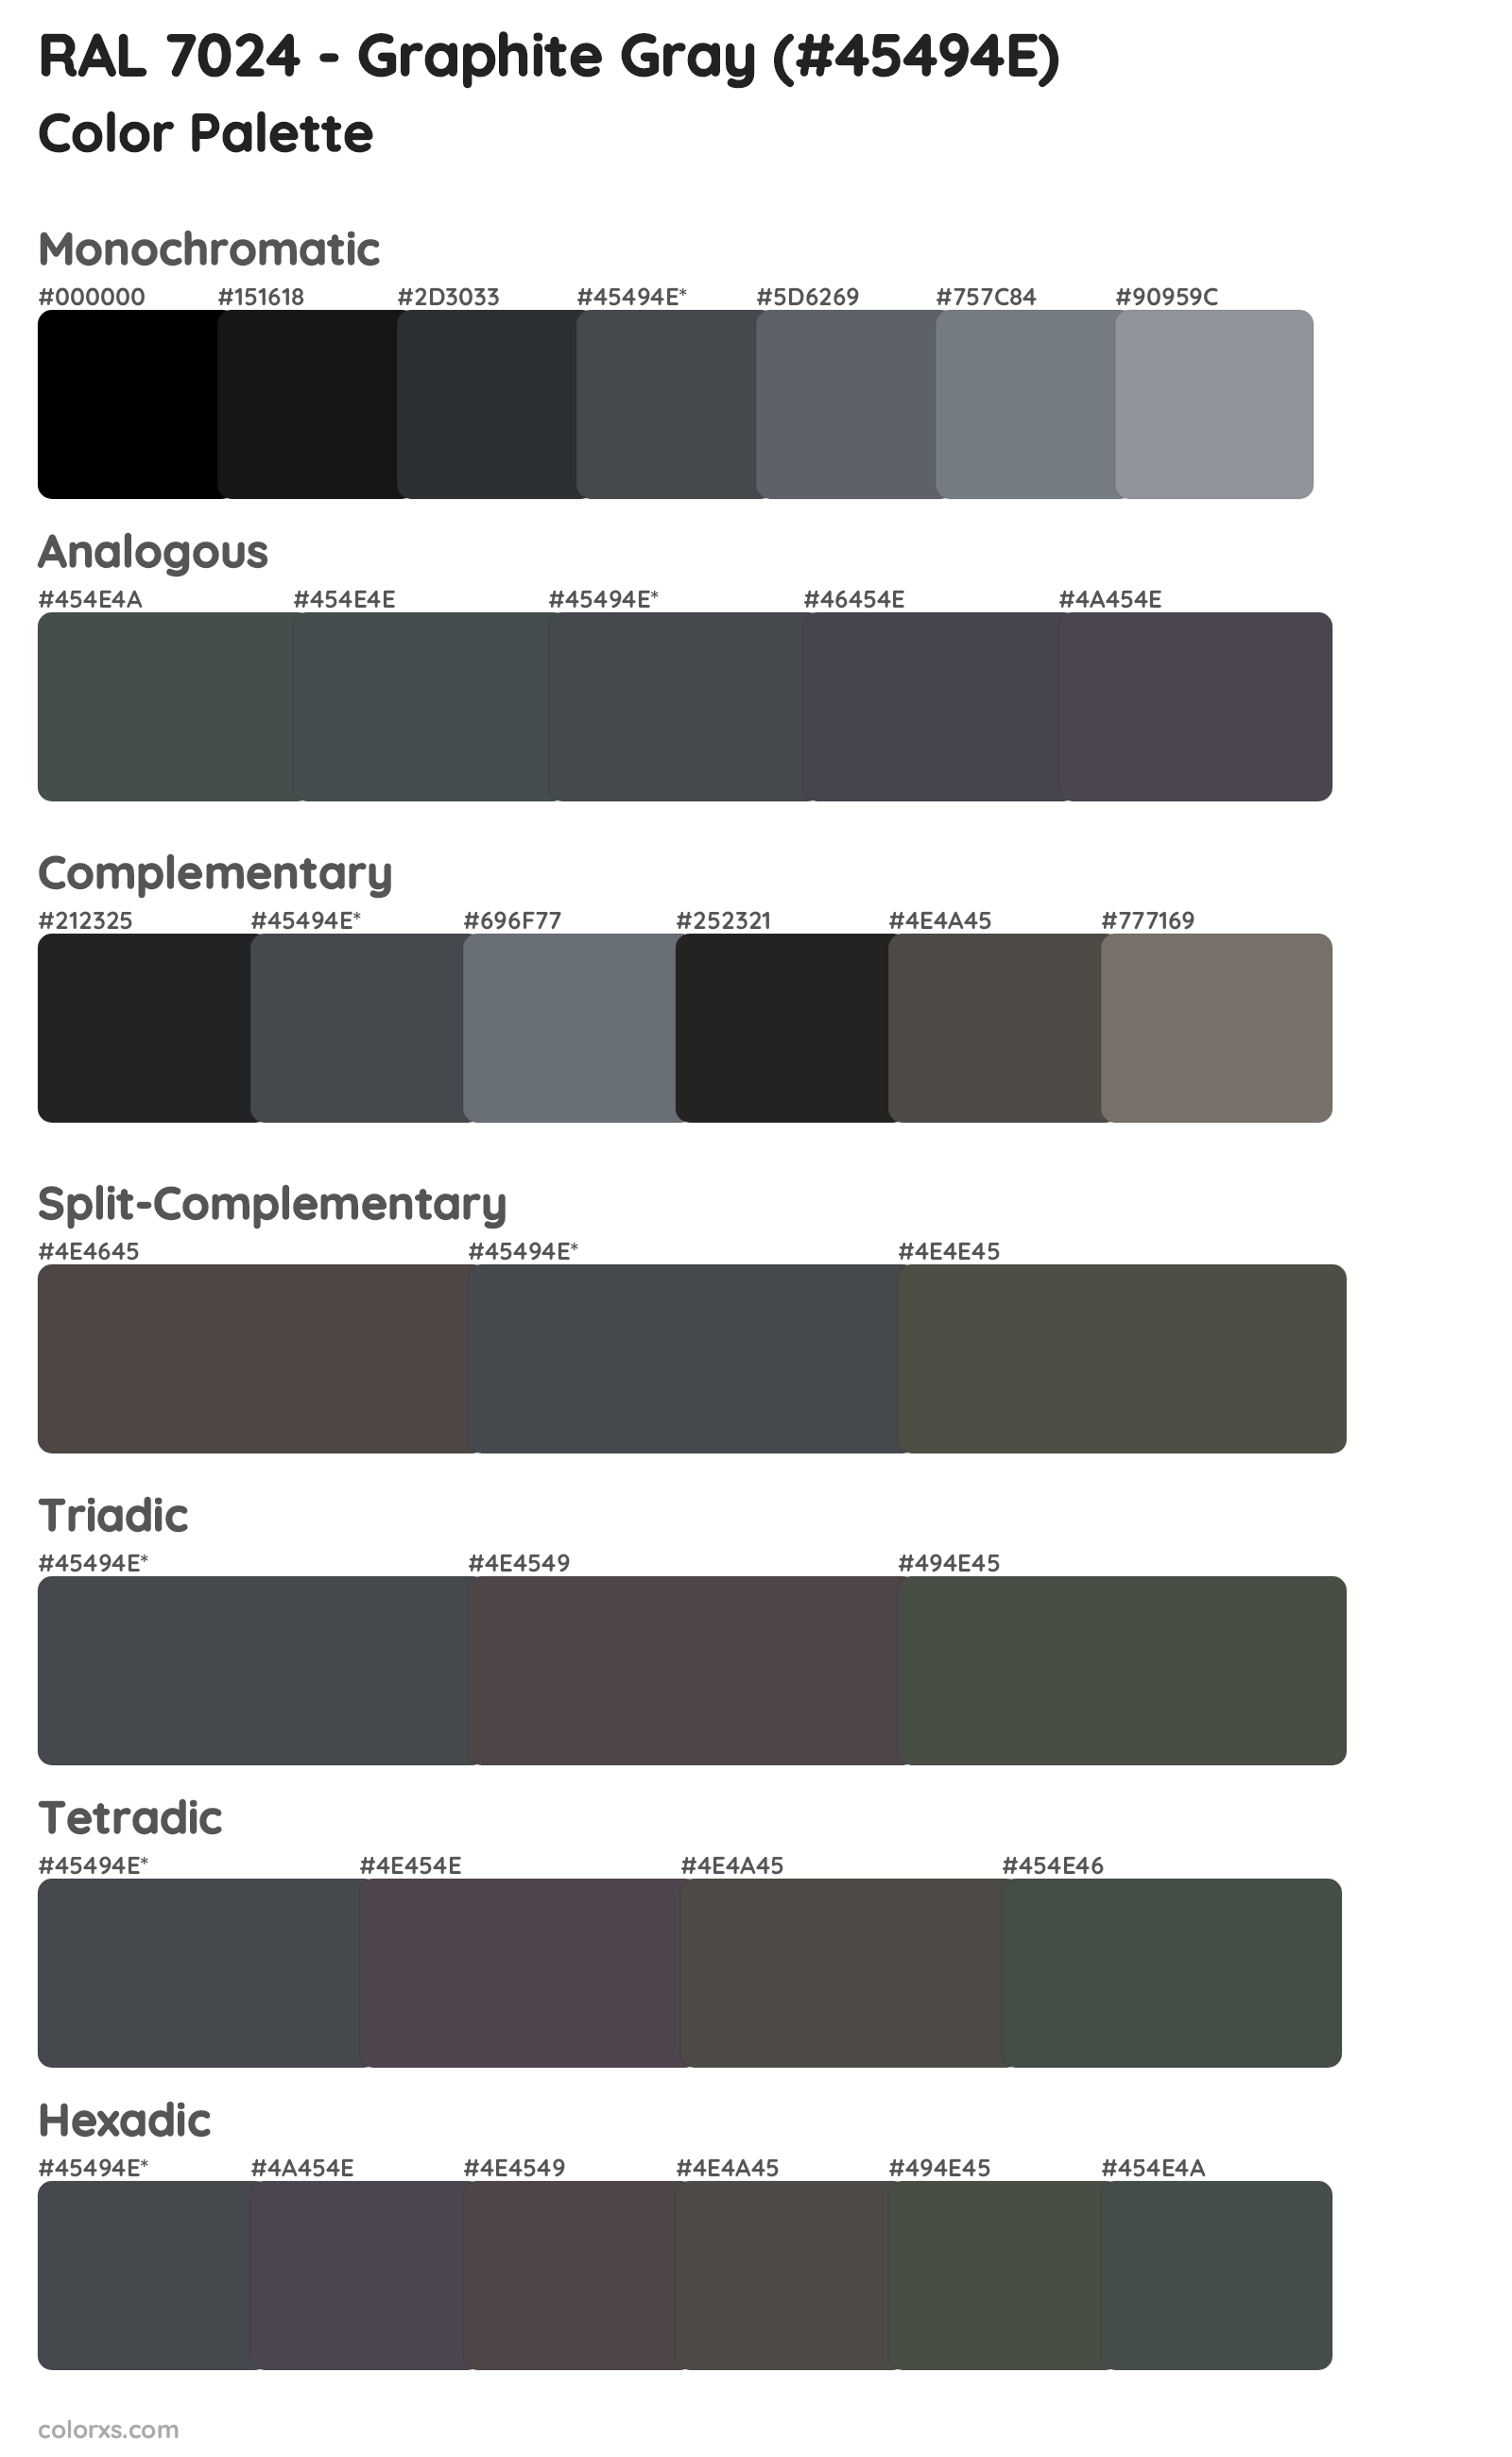 RAL 7024 - Graphite Gray Color Scheme Palettes